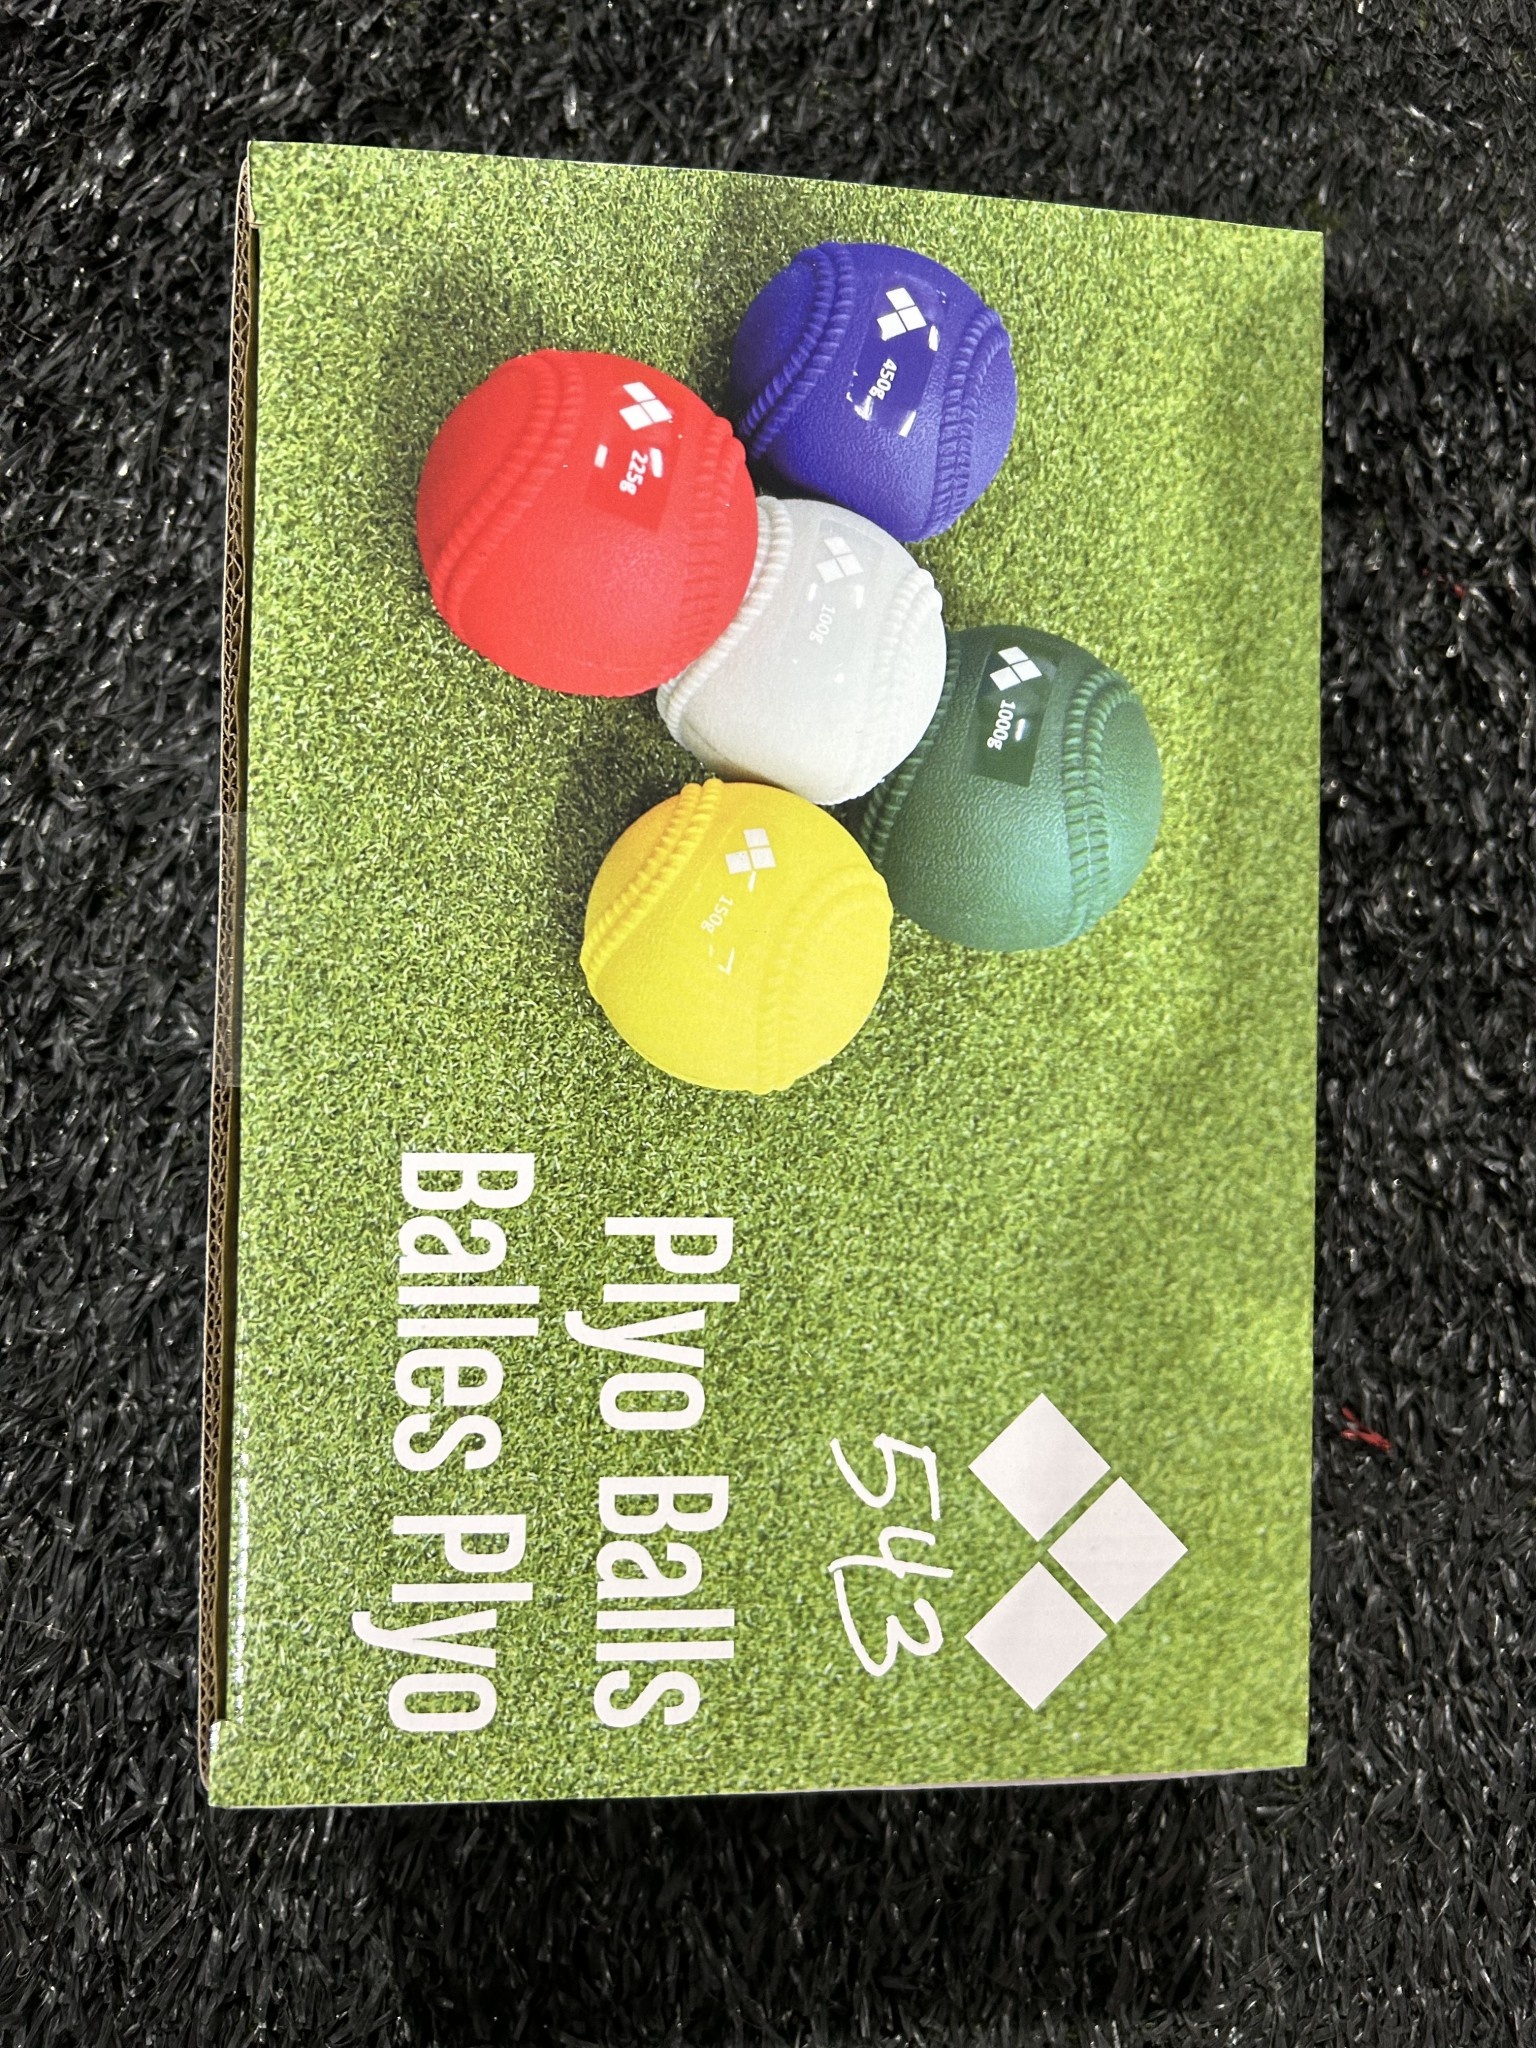 543 Plyo ball training balls (set of 5)